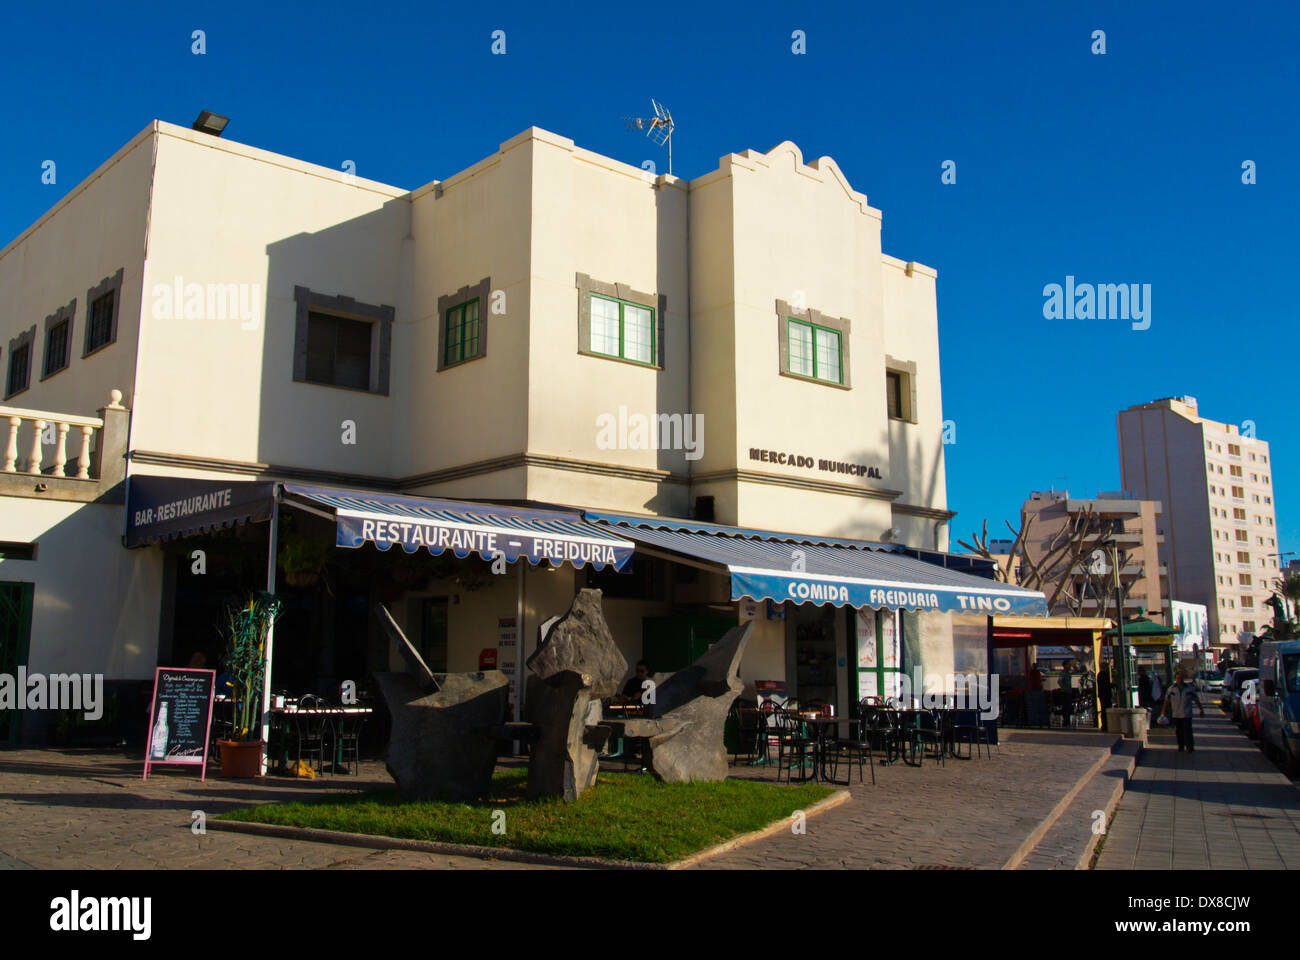 Restaurants and Mercado Municipal market hal, Puerto del Rosario, Fuerteventura, Canary Islands, Spain, Europe Stock Photo